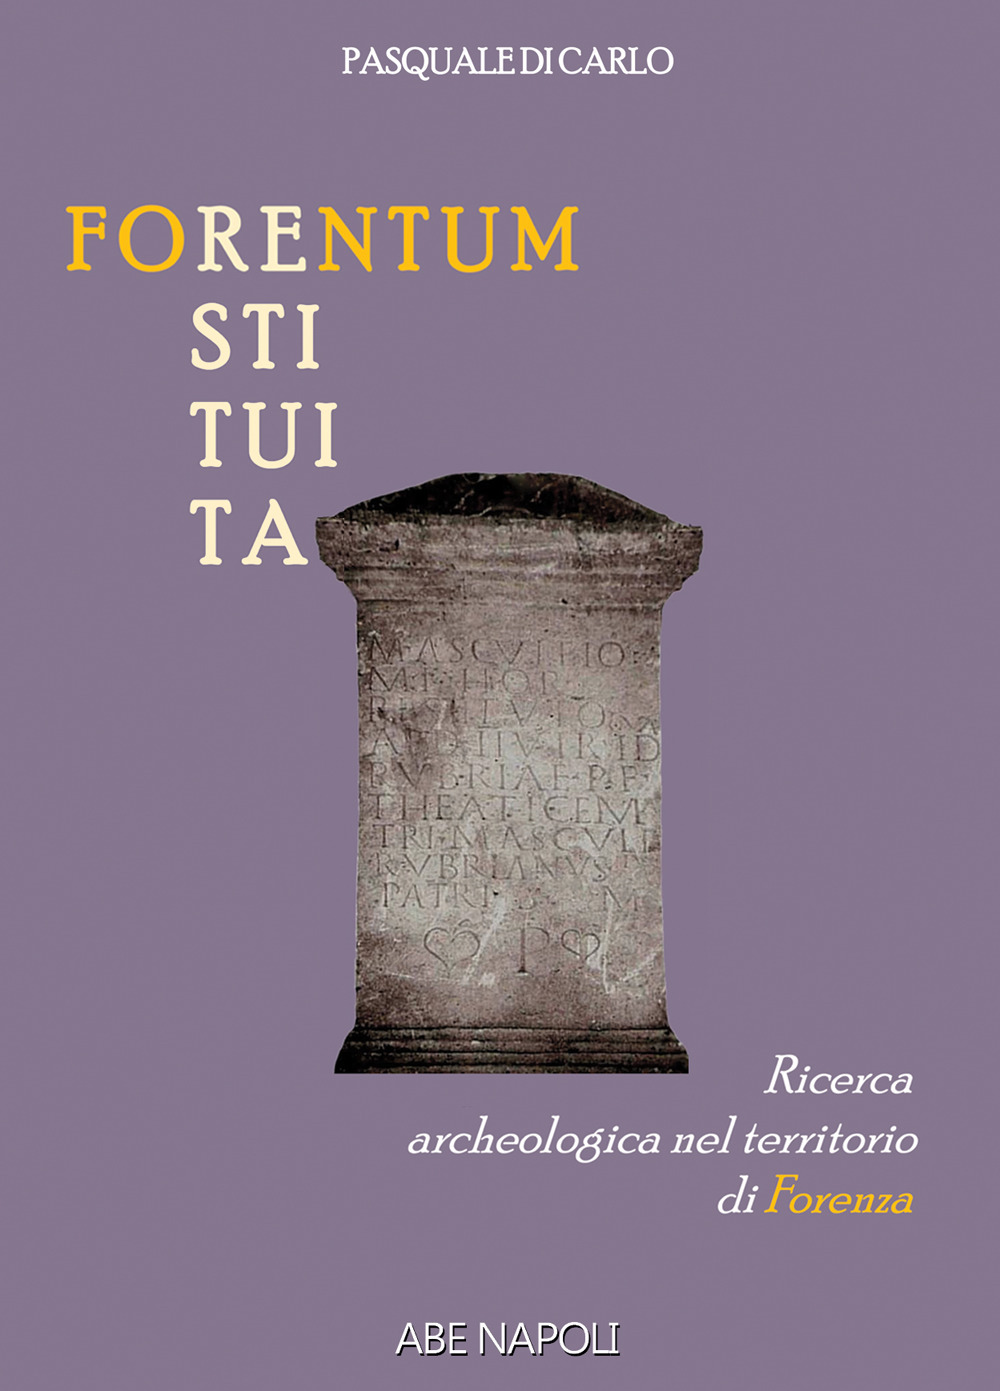 Forentum restituita. Ricerca archeologica nel territorio di Forenza